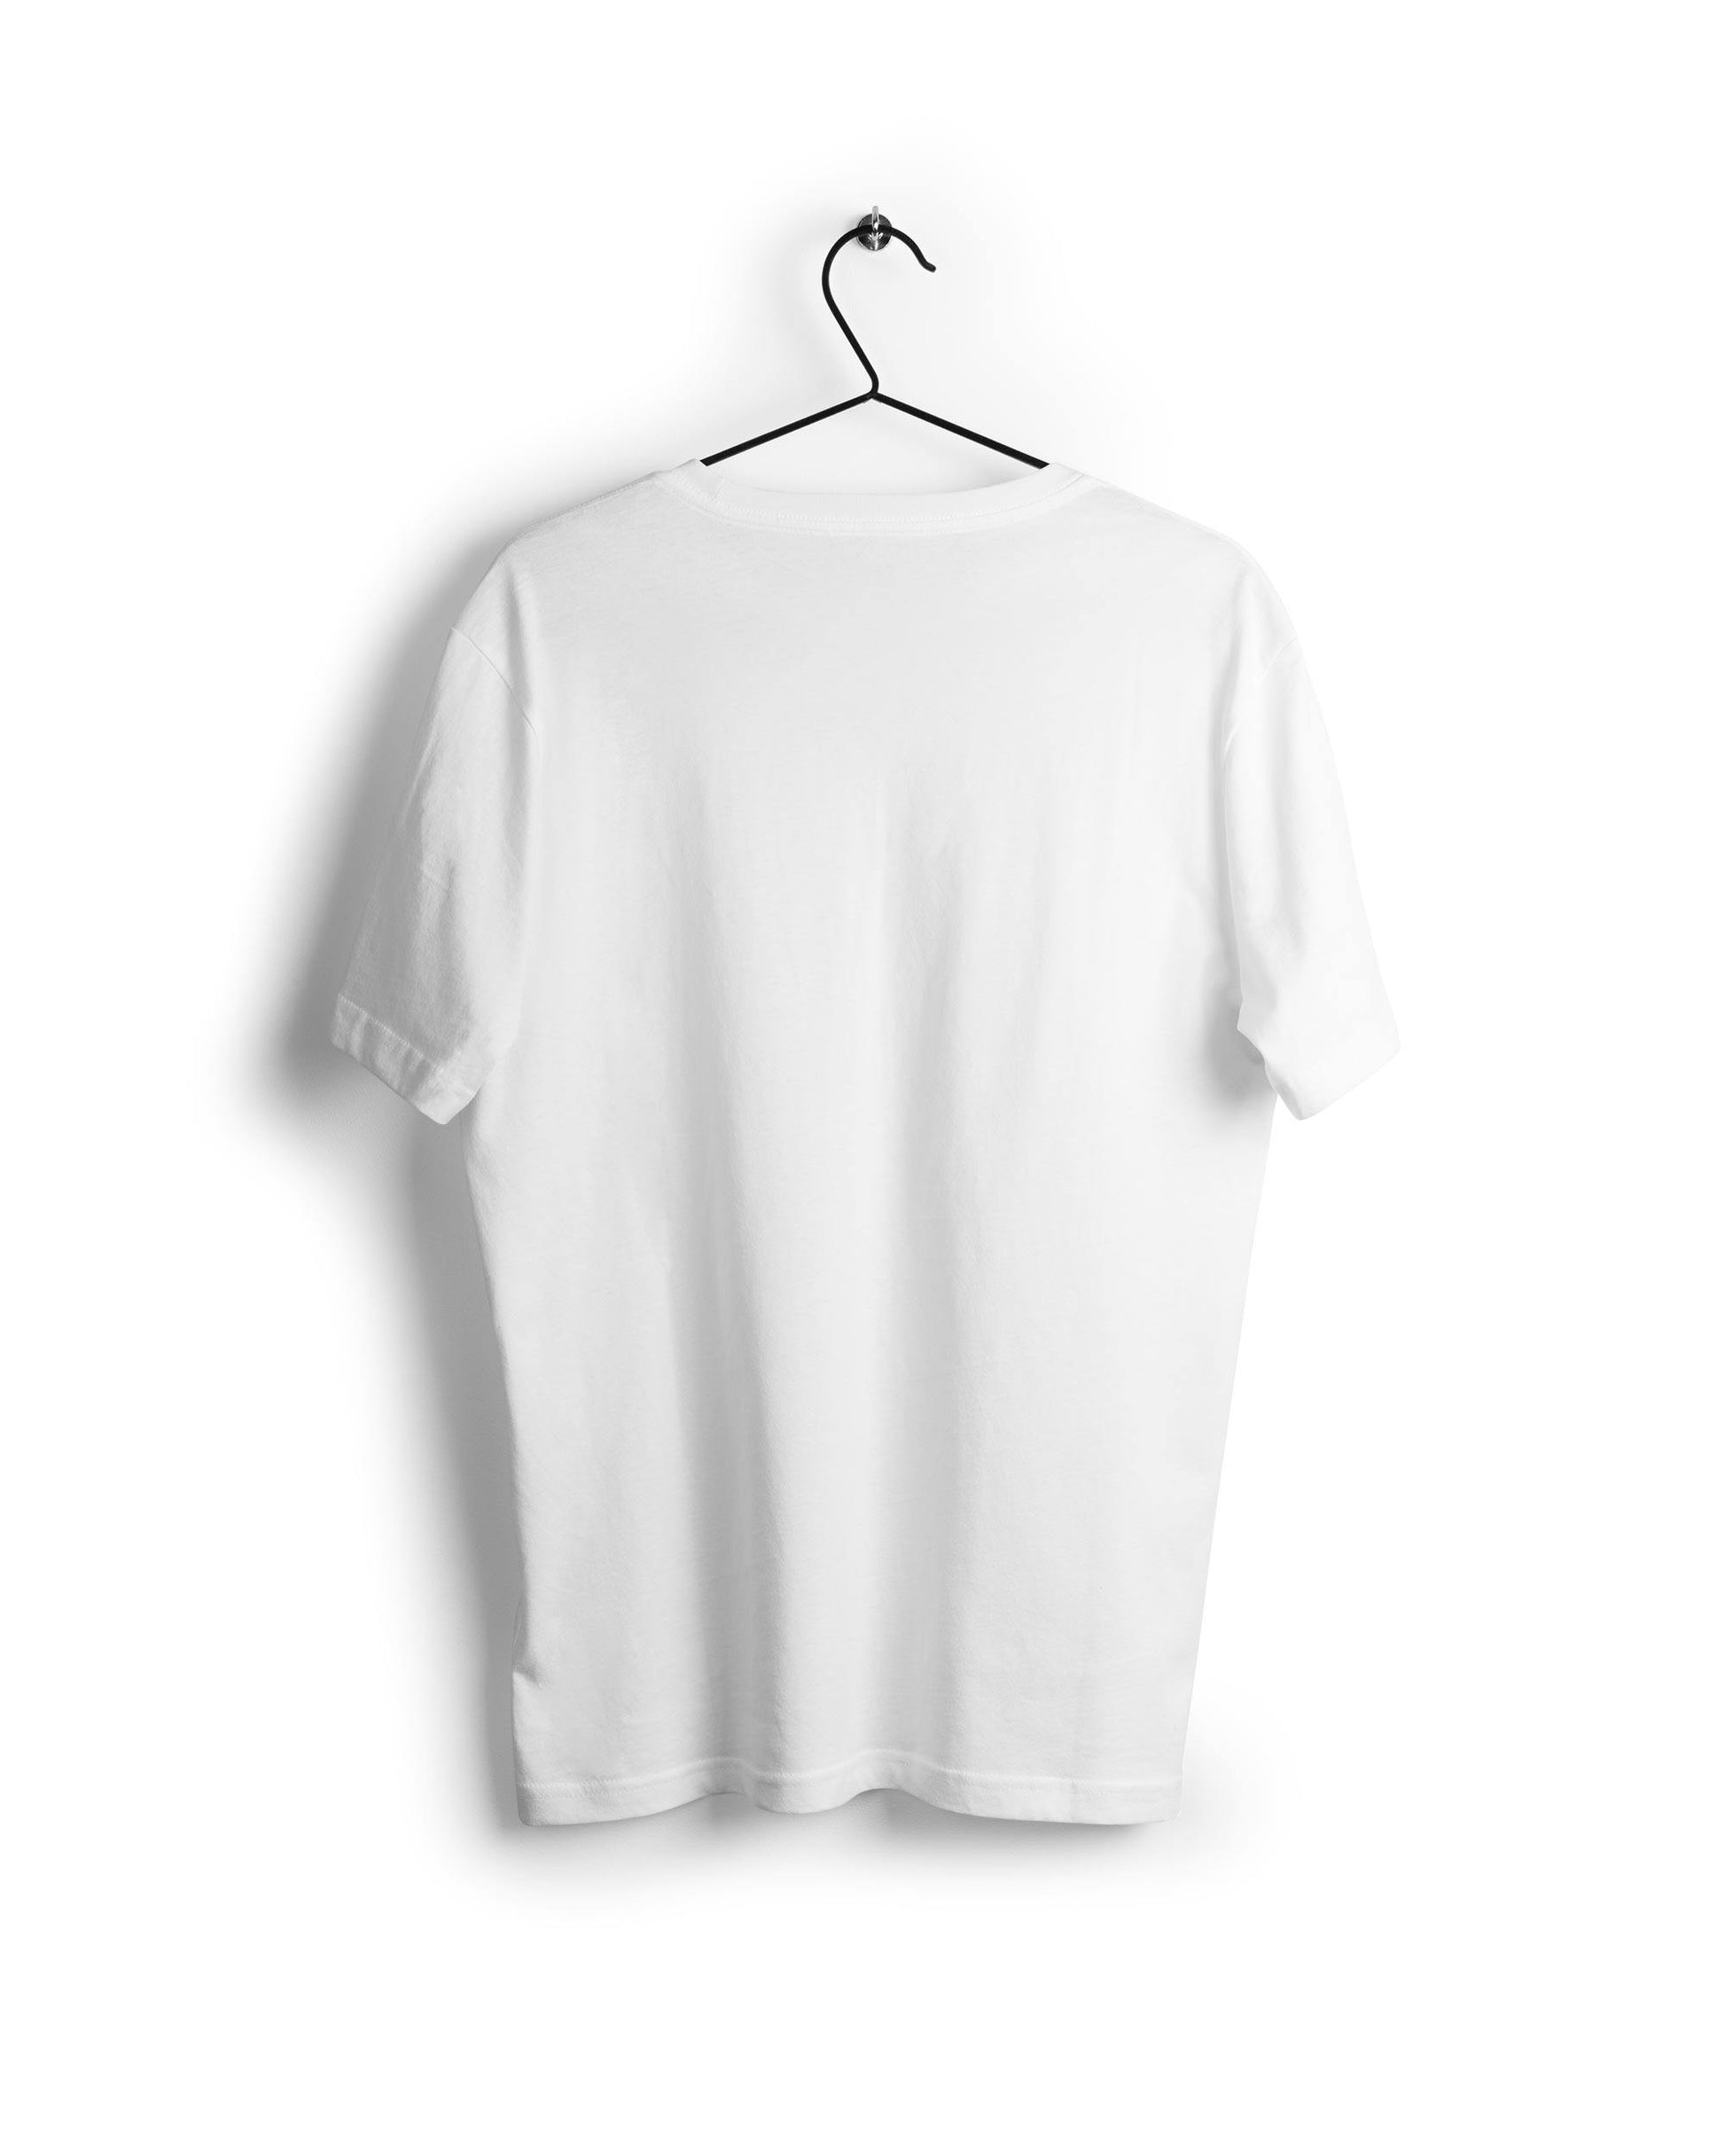 El Professor La Casa De Papel X Ravin X Hippo - Digital Graphics Basic T-shirt White - Ravin 